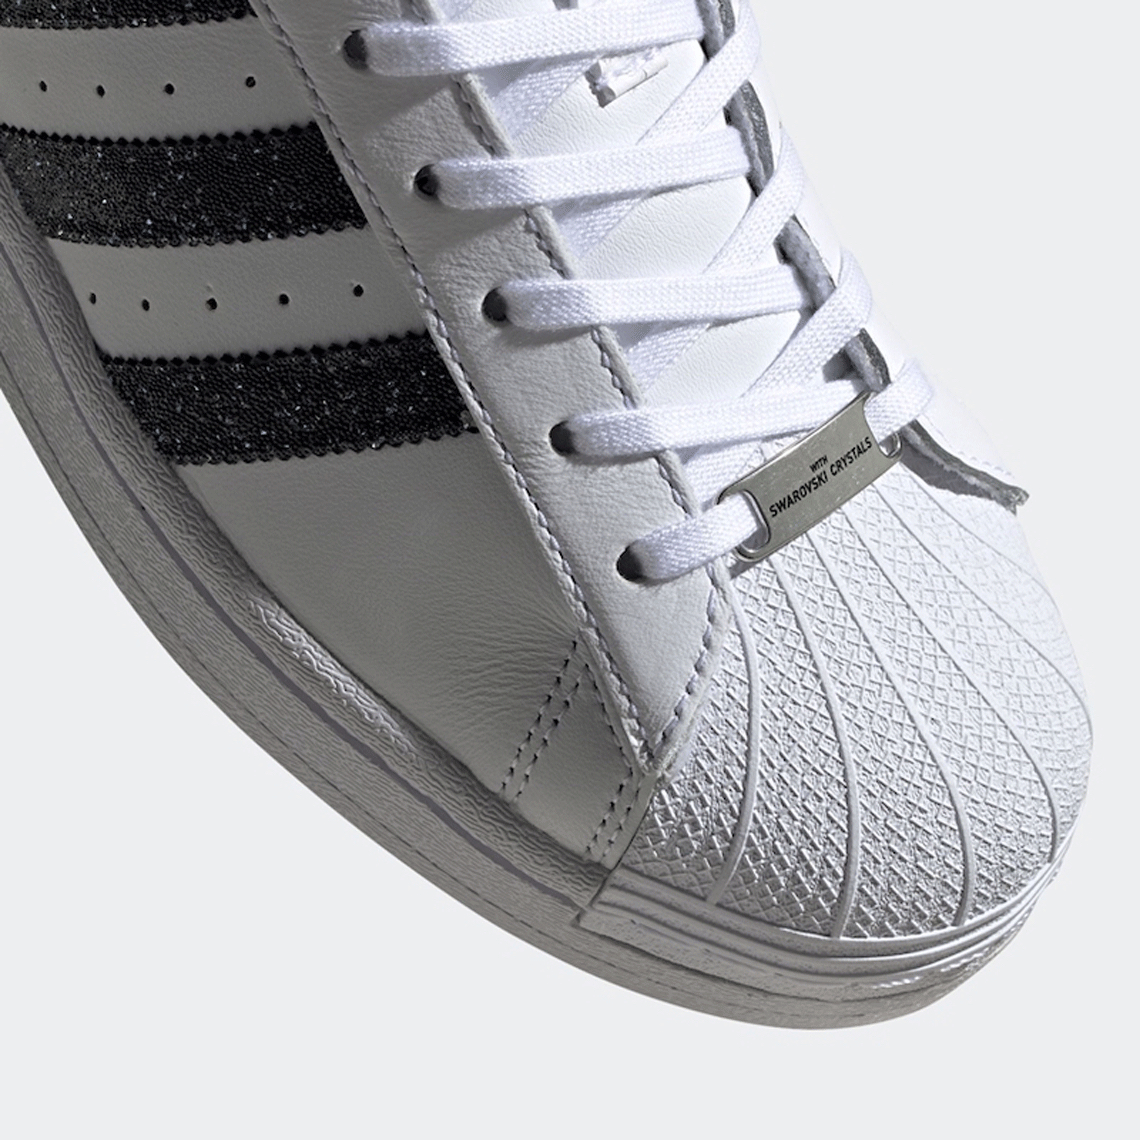 Swarovski adidas Superstar FX7480 Release Date | SneakerNews.com